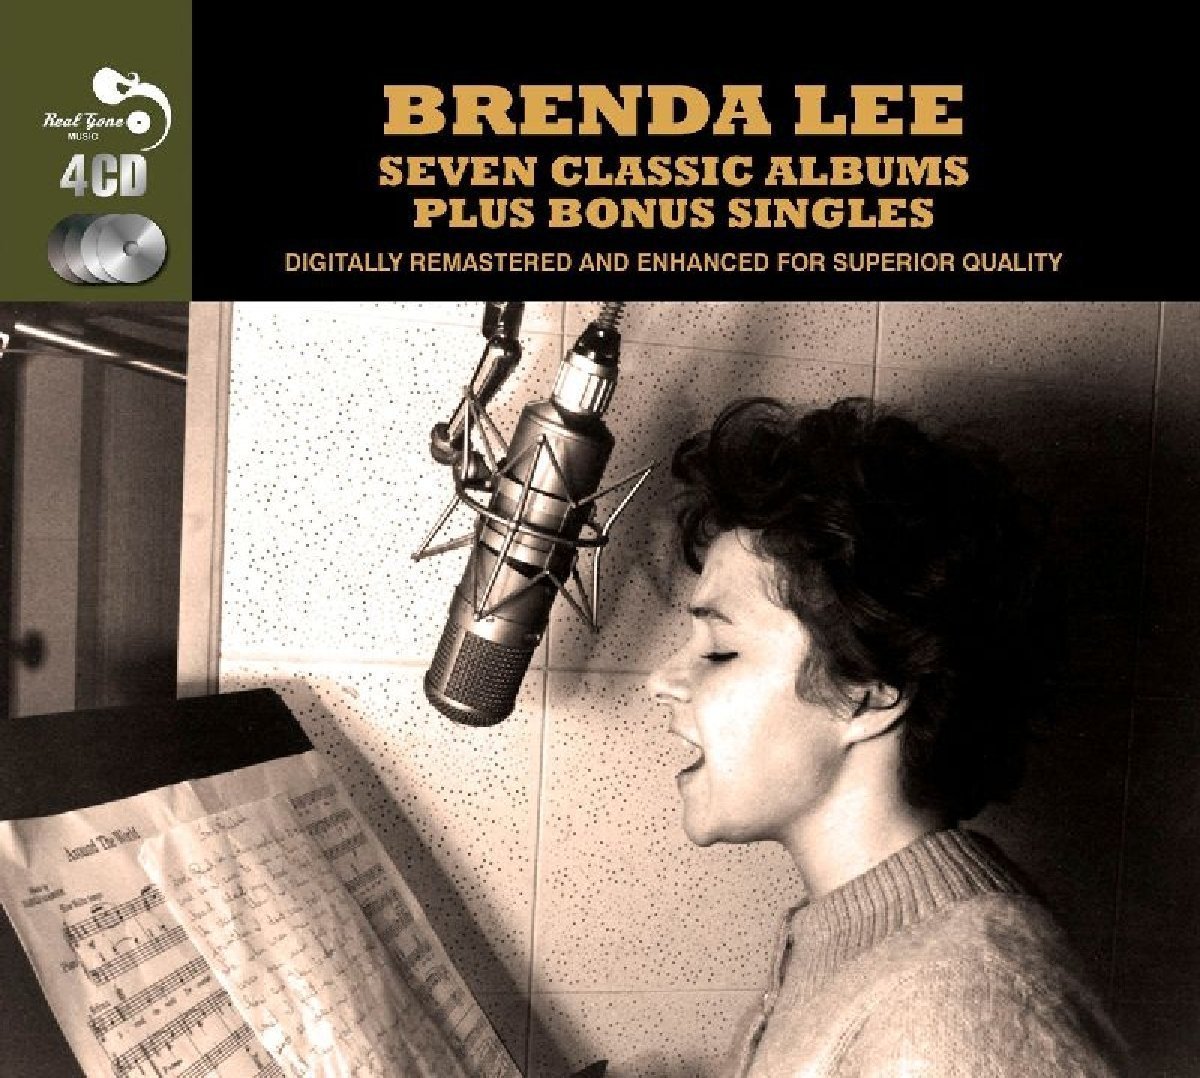 Севен ли. Brenda Lee emotions. (1962) Sincerely, Brenda Lee обложка альбома. Brenda Lee один дома. Слова к песне Brenda Lee.